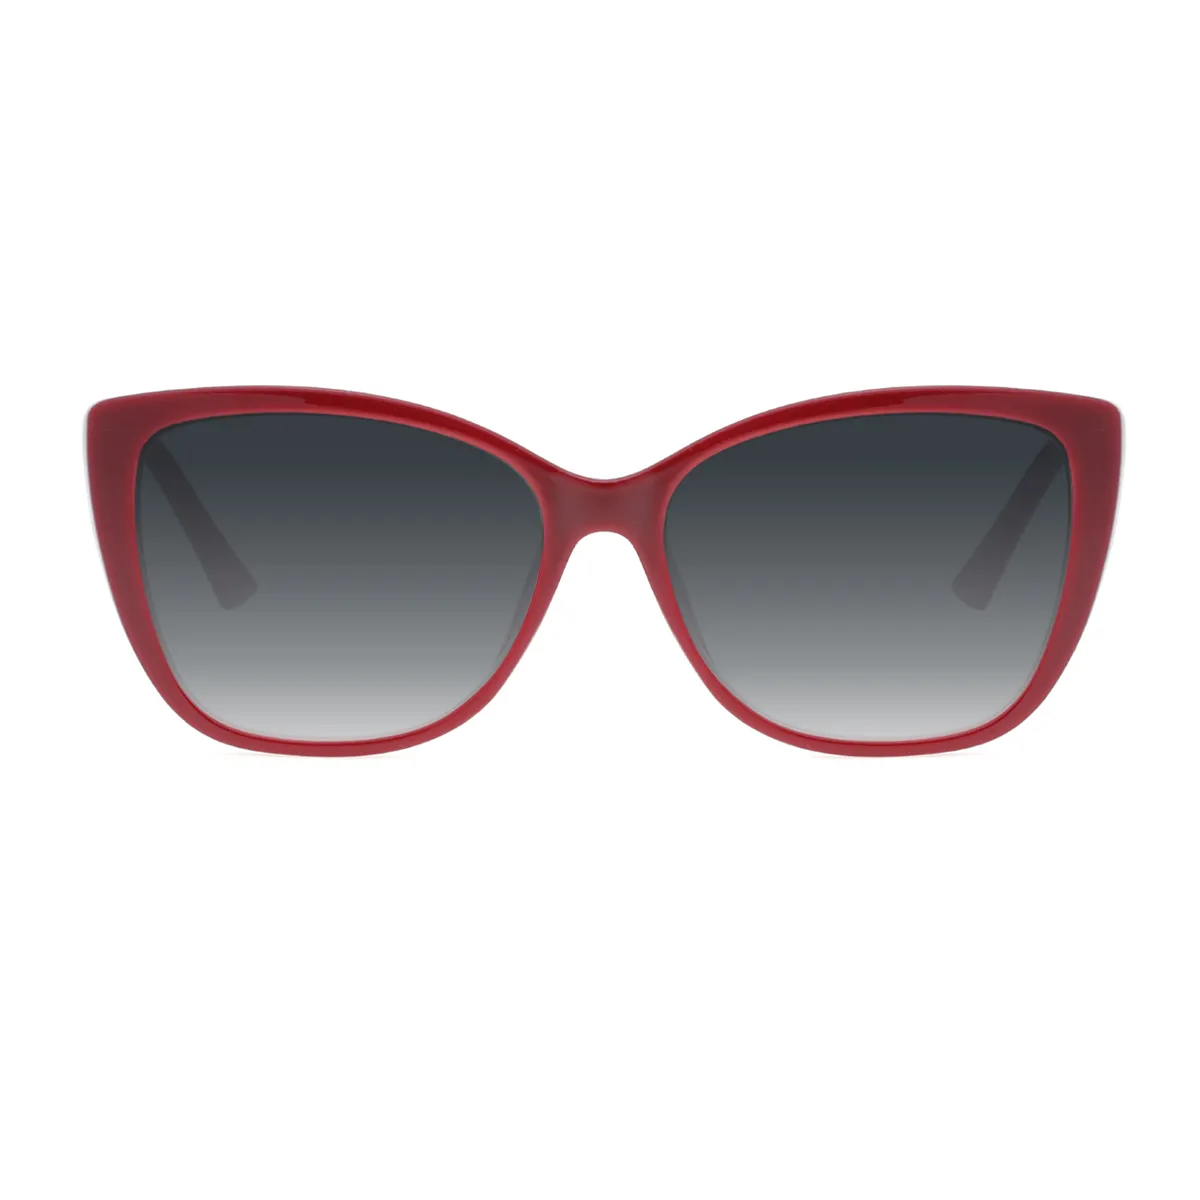 Classic Square Black  Sunglasses for Women & Men